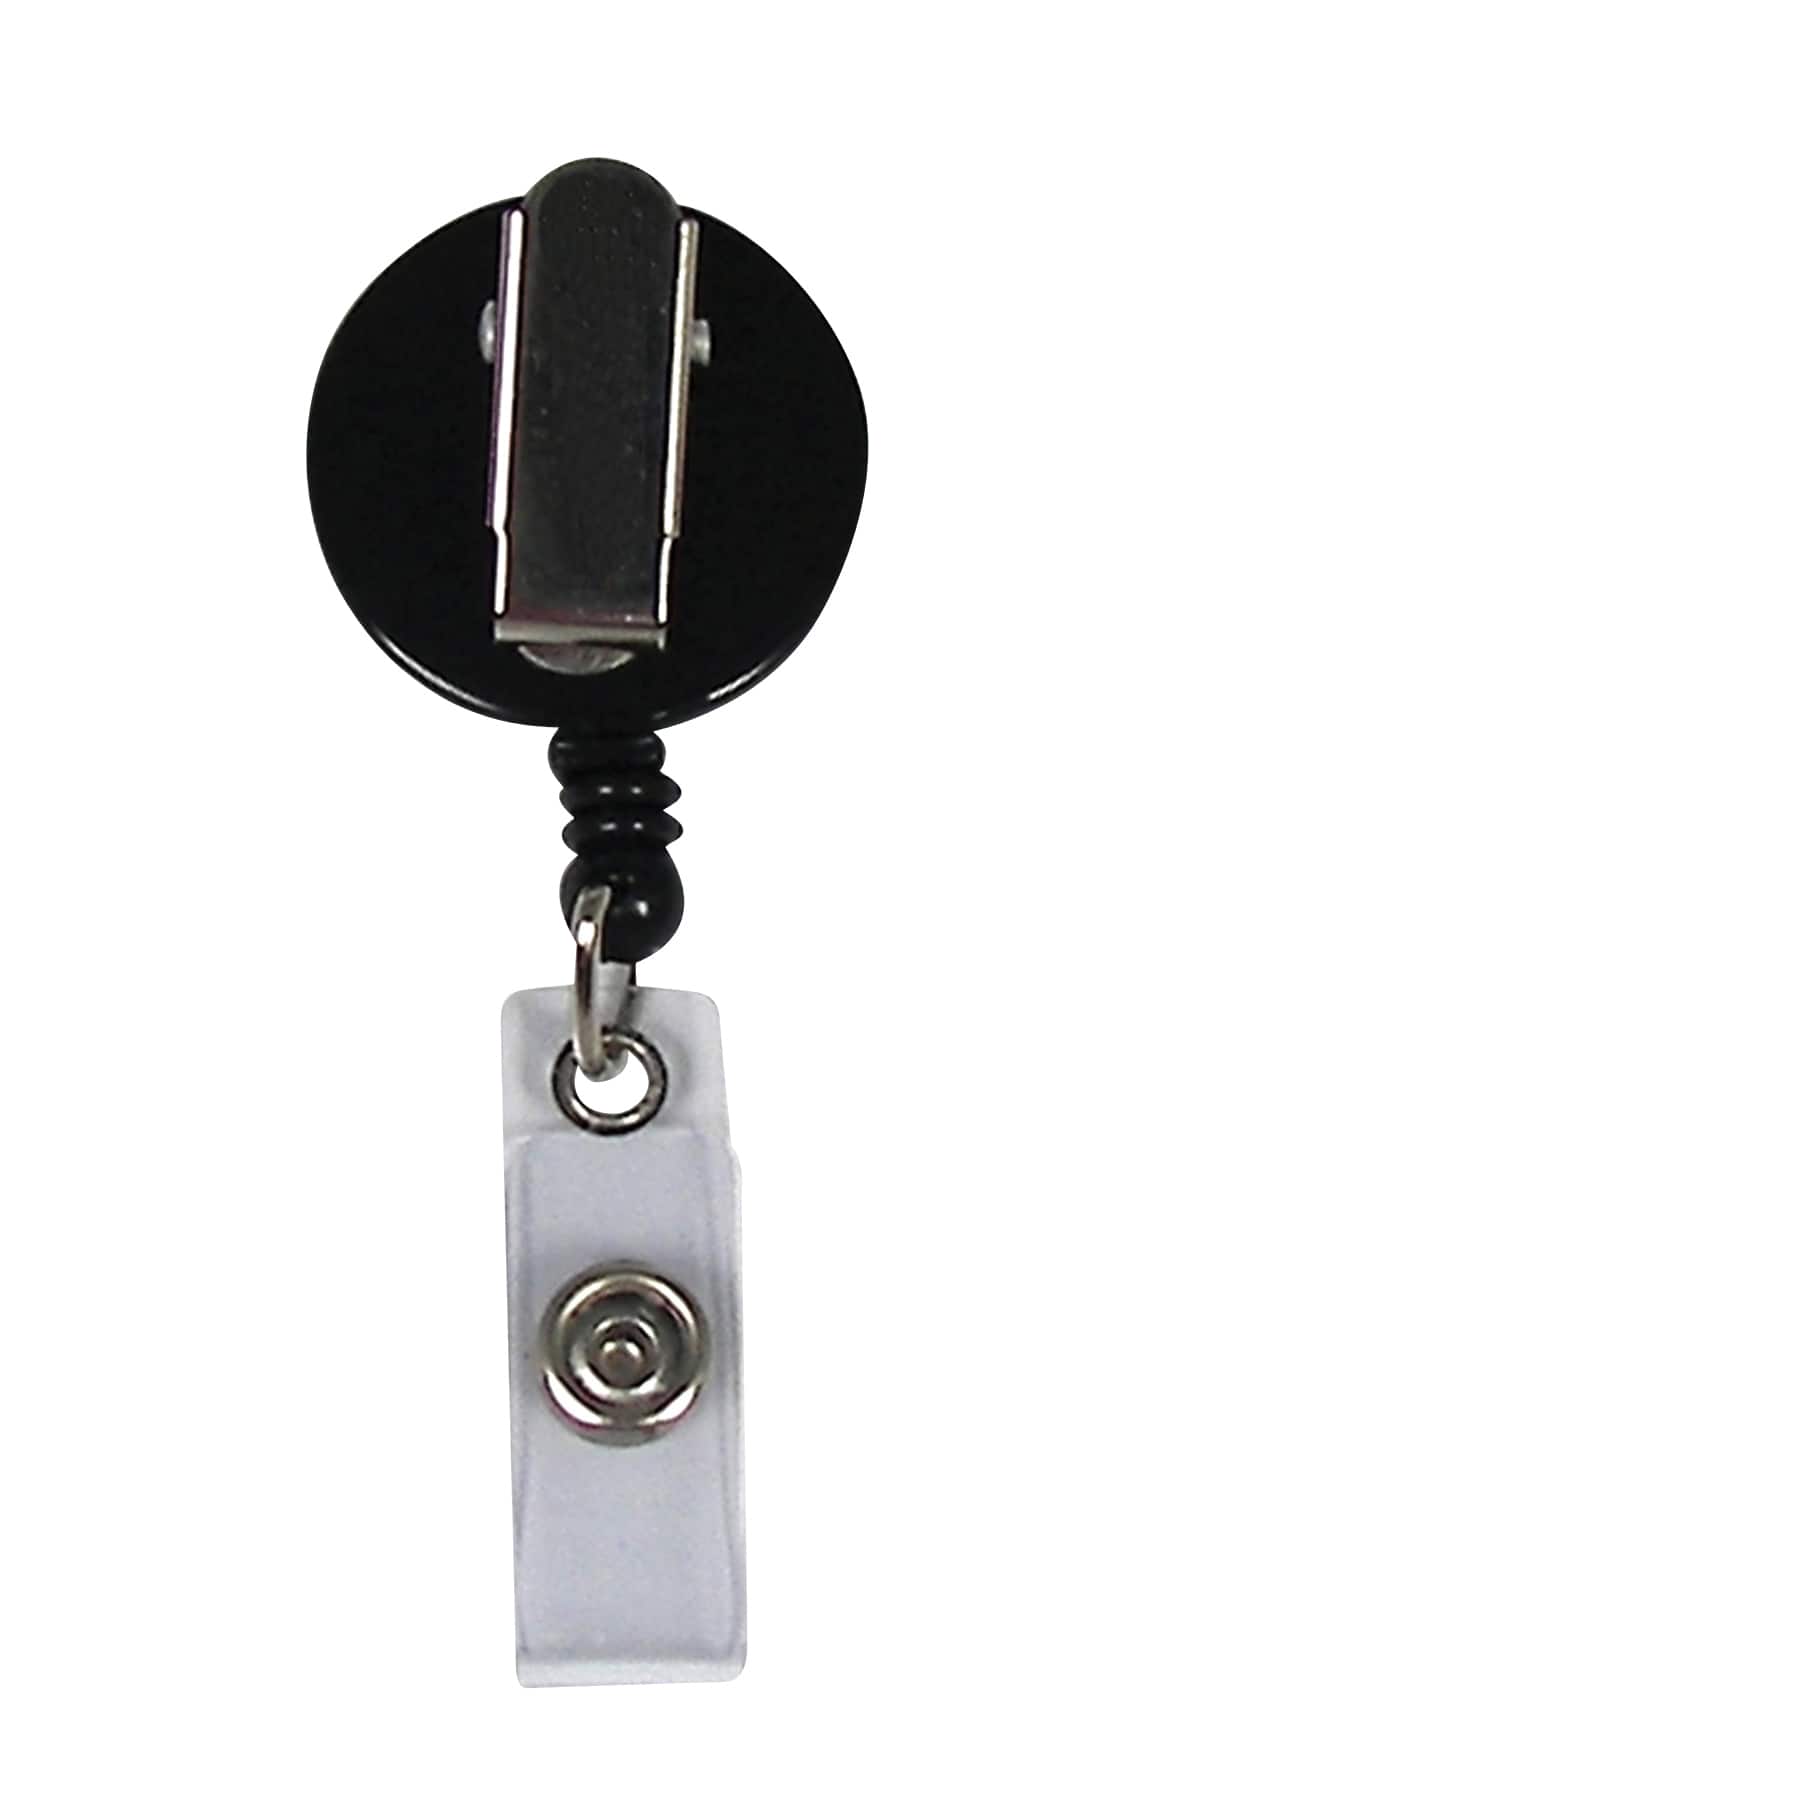 Carabiner Retractable Badge Reel, Slide Clip